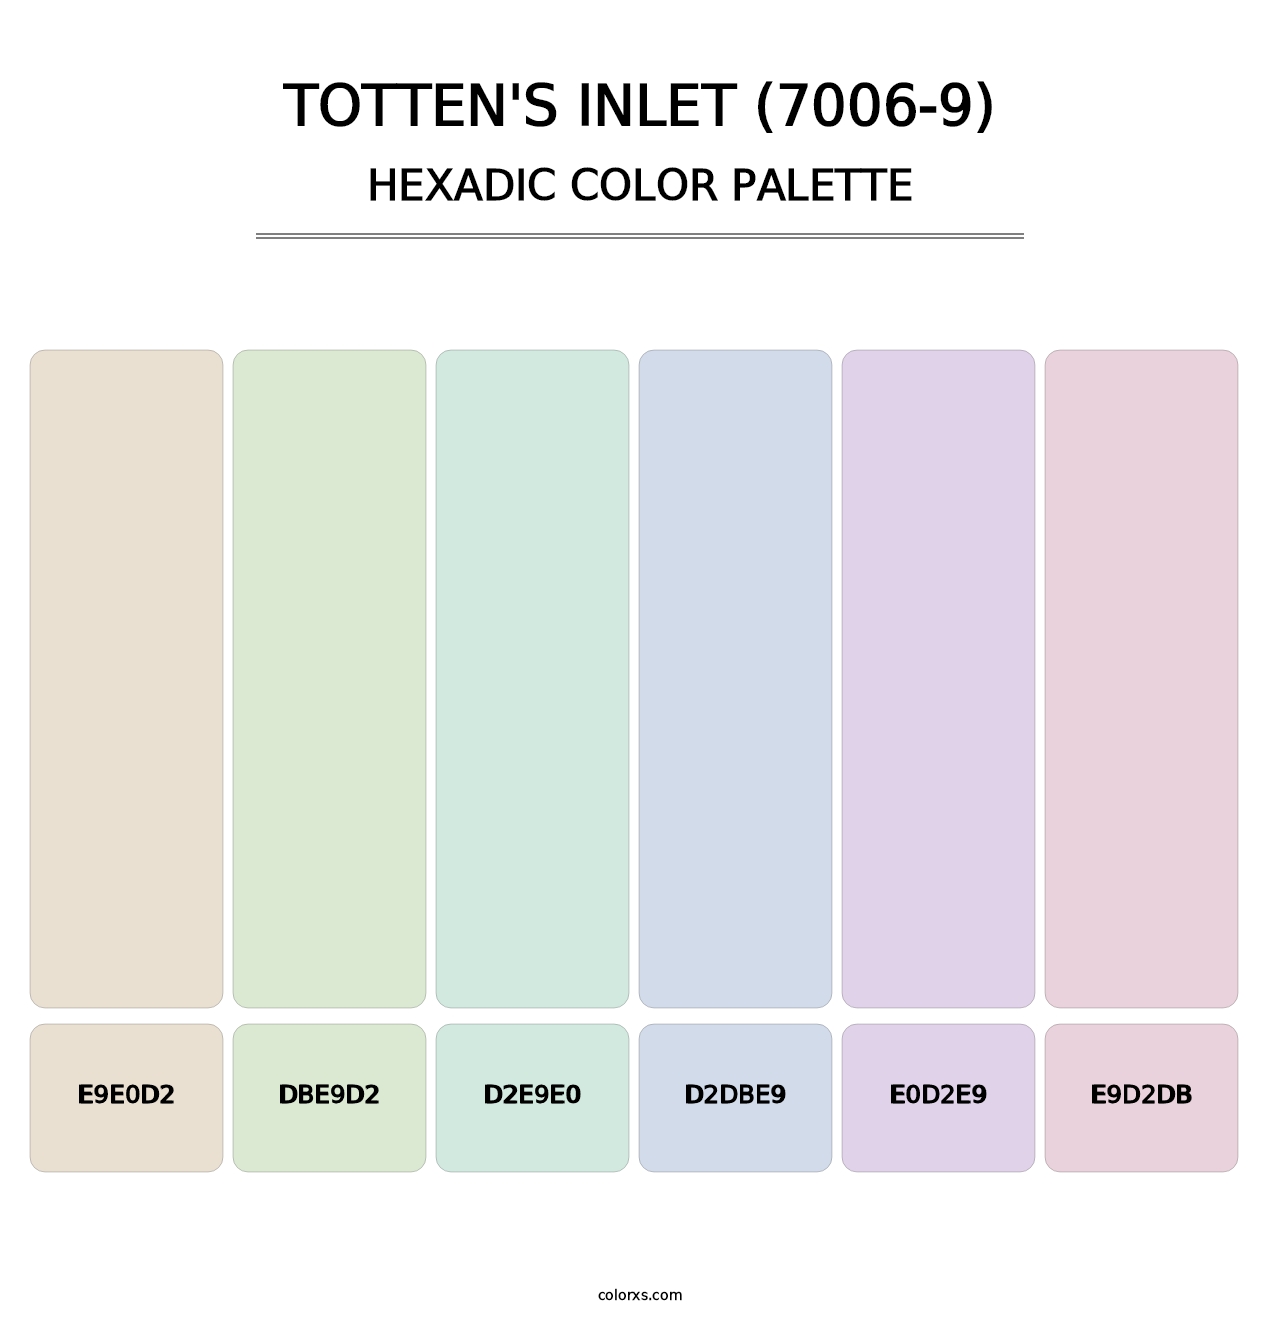 Totten's Inlet (7006-9) - Hexadic Color Palette